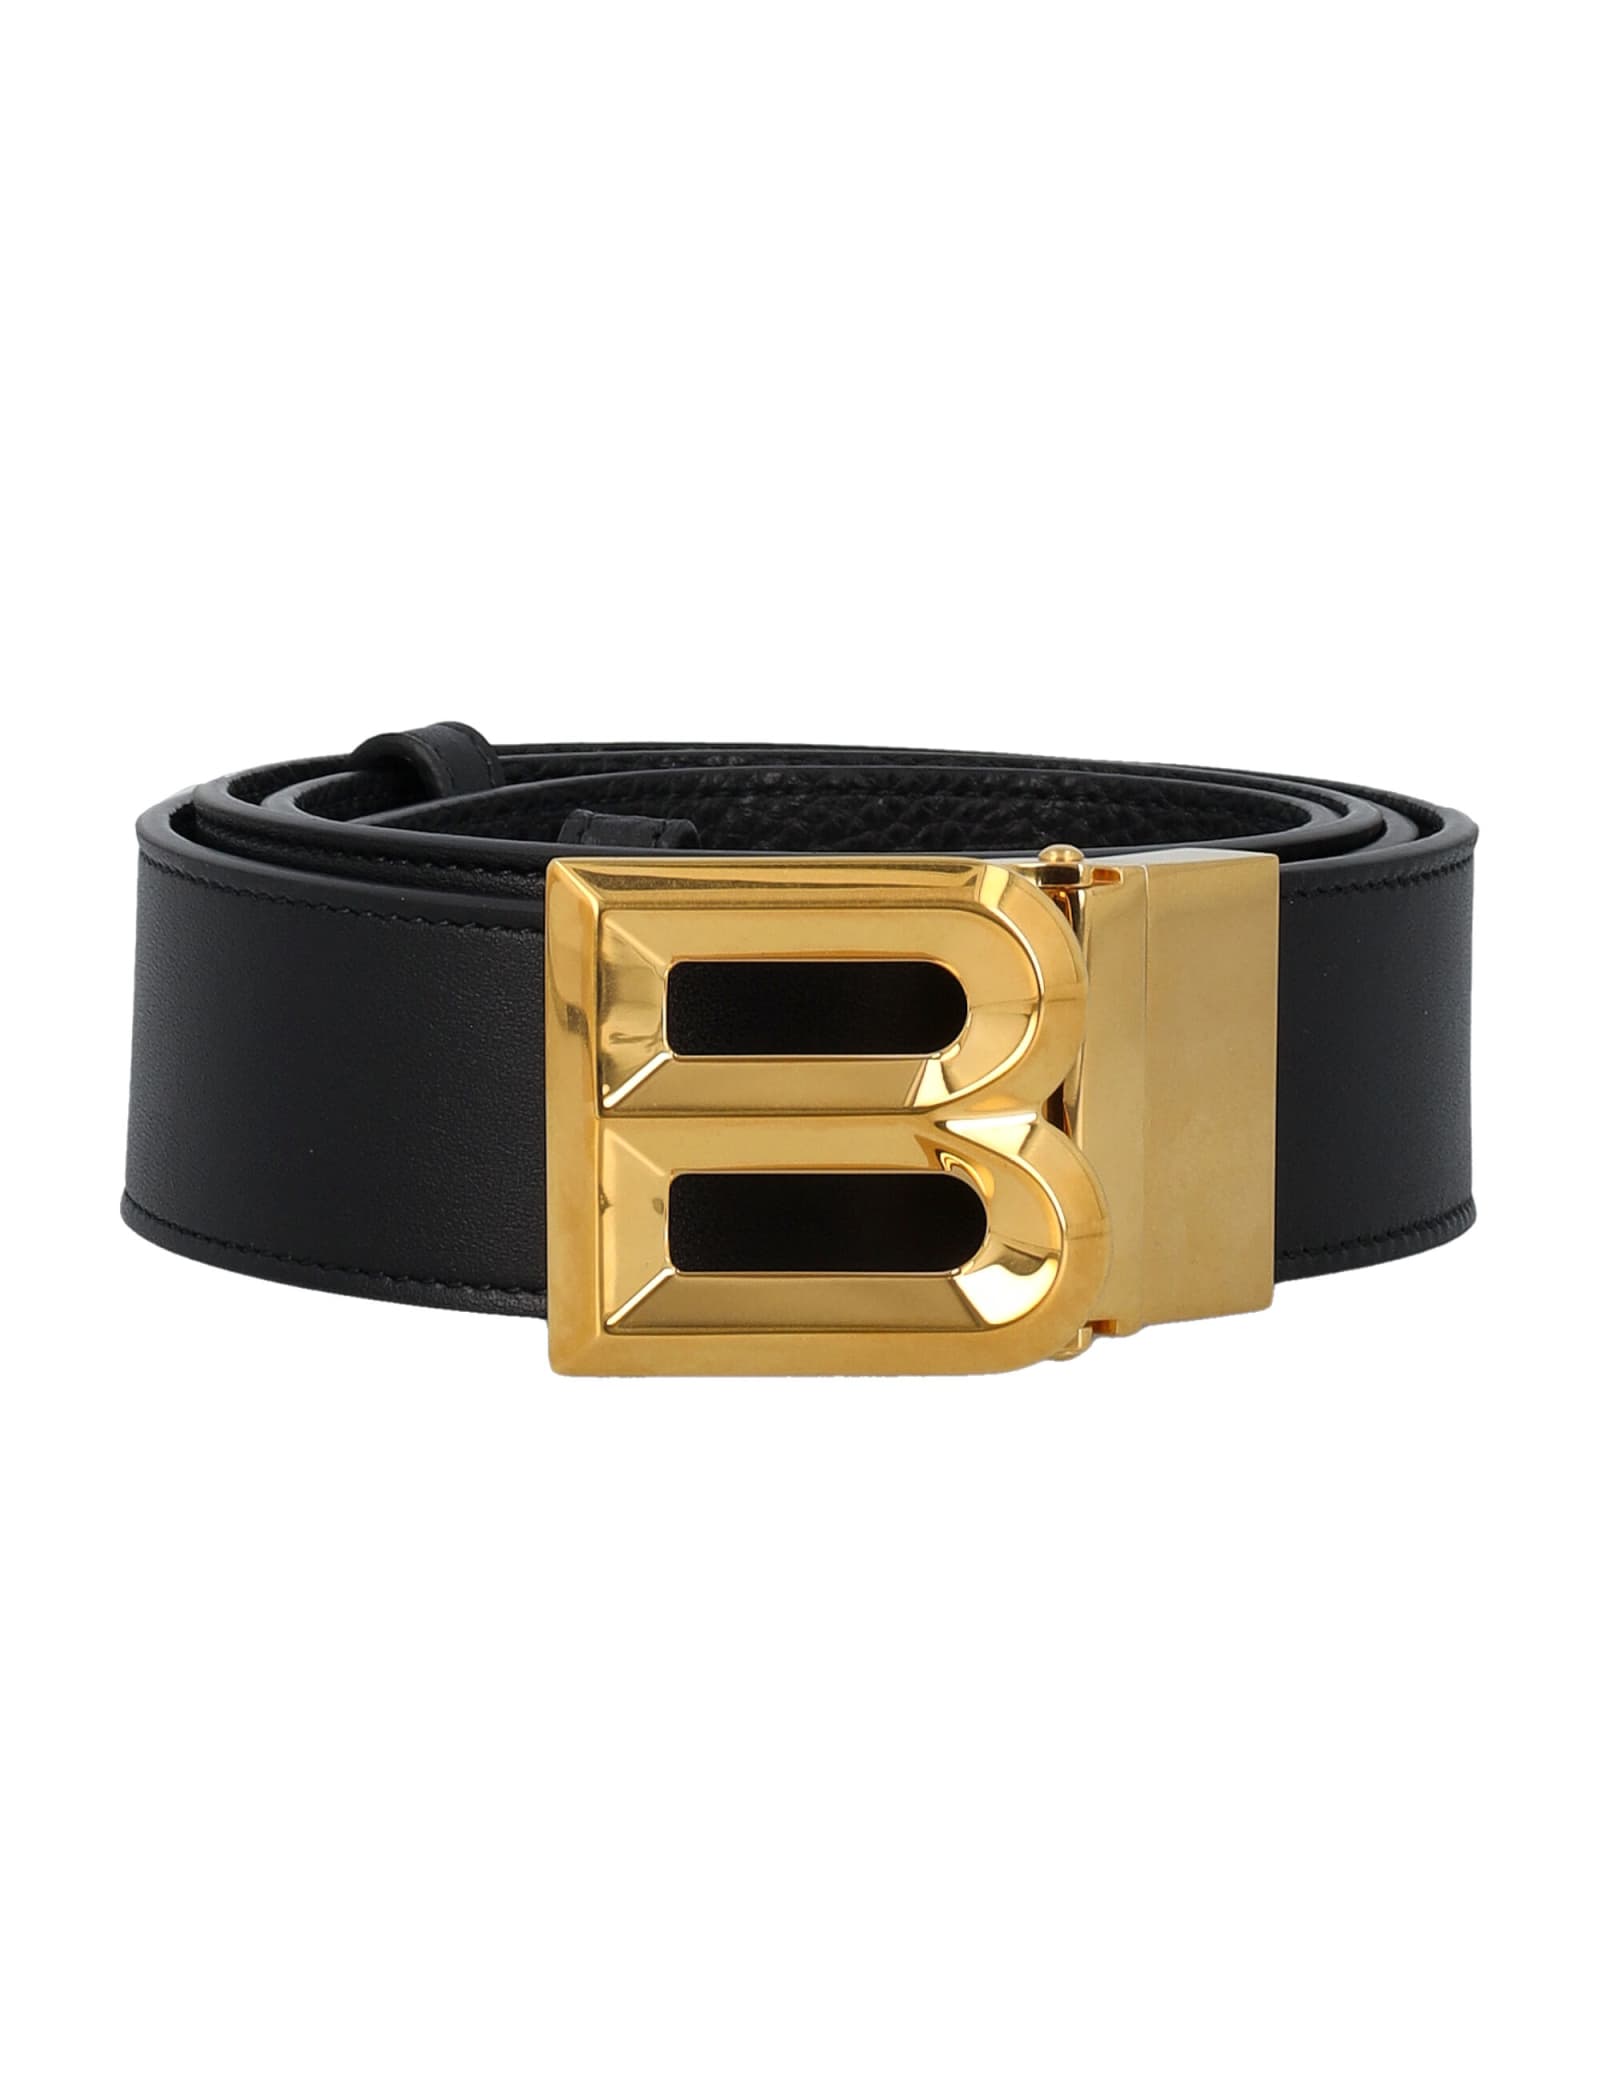 B-bold 35 Belt